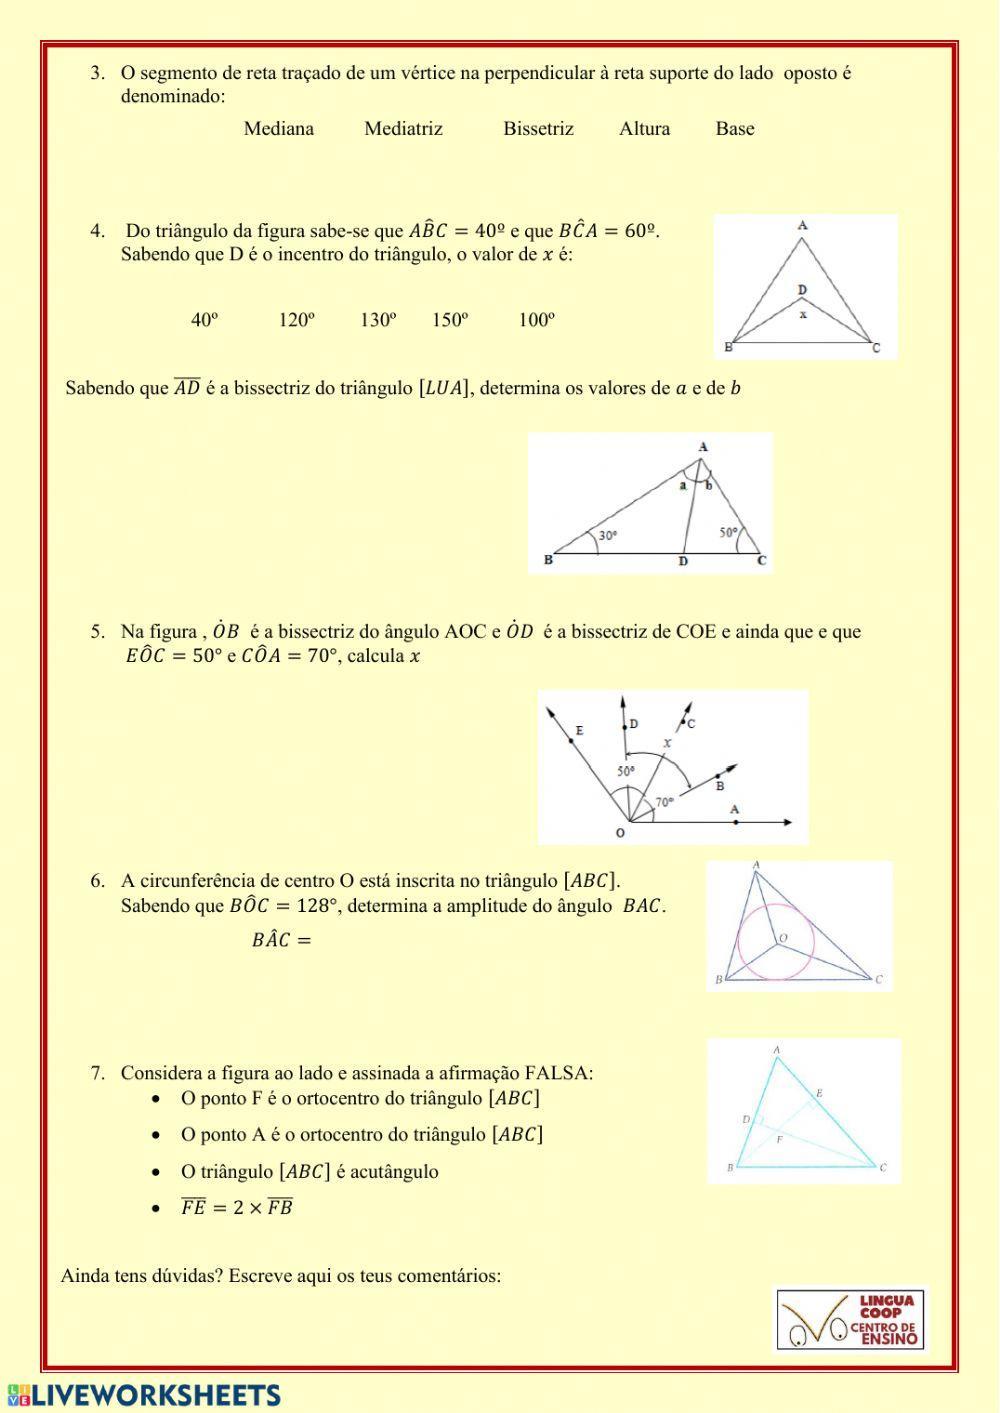 Pontos notáveis do triângulo 9.1